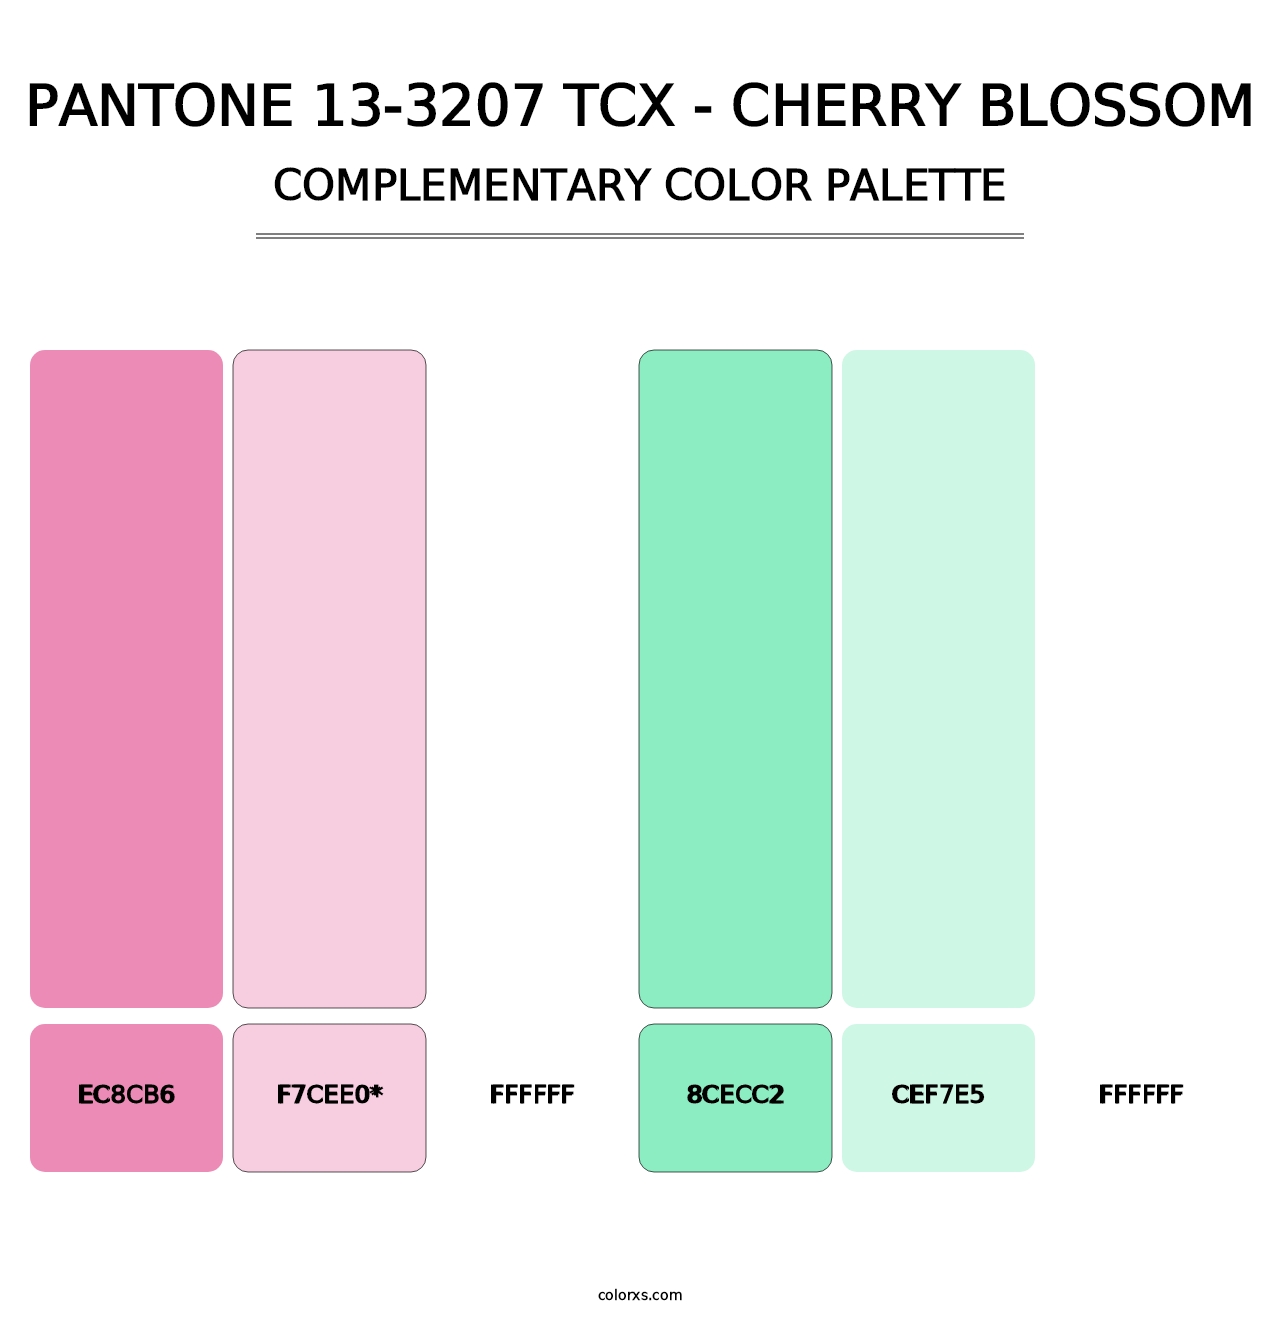 PANTONE 13-3207 TCX - Cherry Blossom - Complementary Color Palette